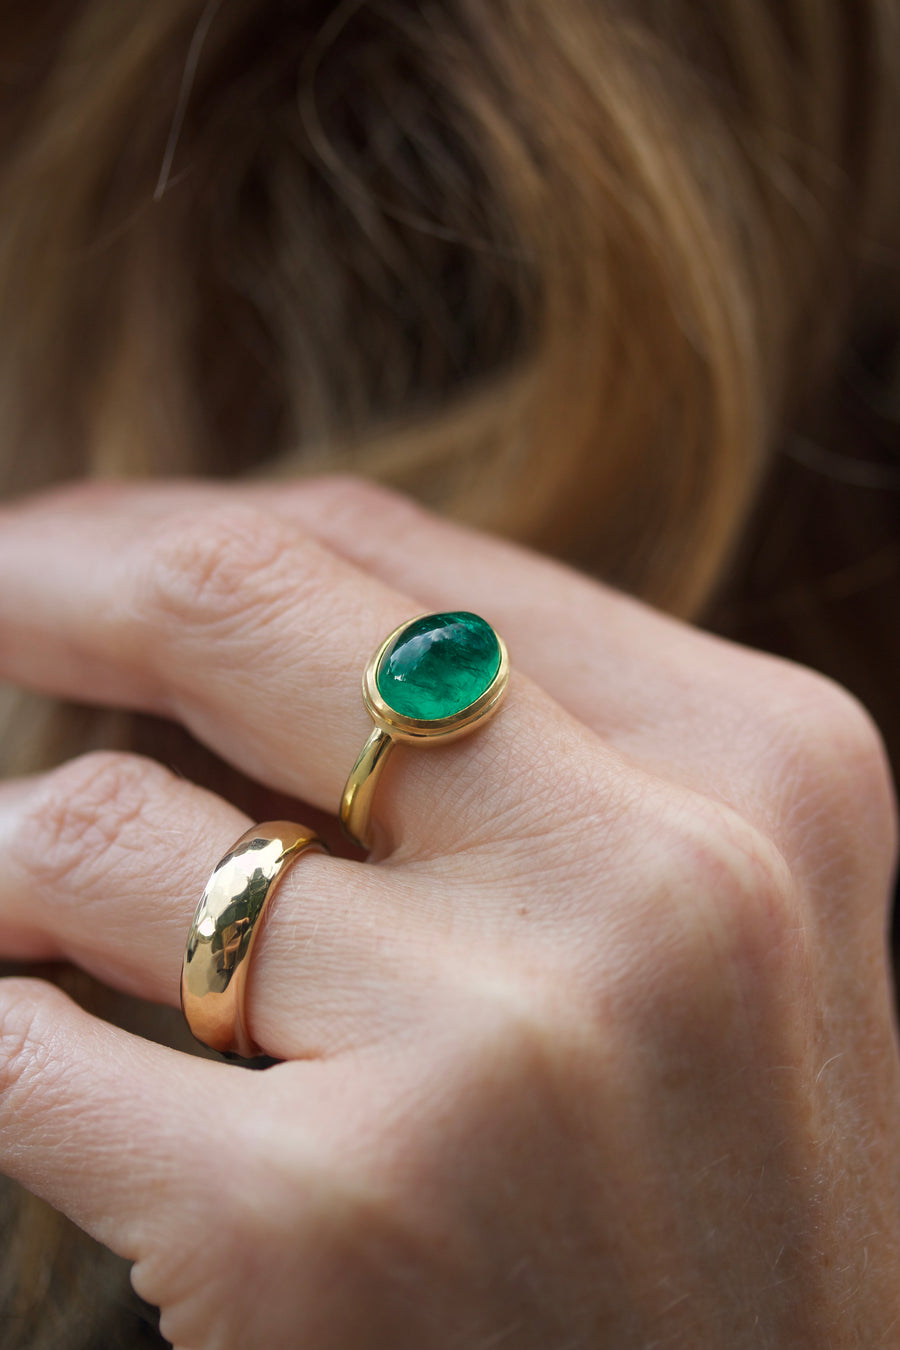 Cabochon Cut Emerald Ring